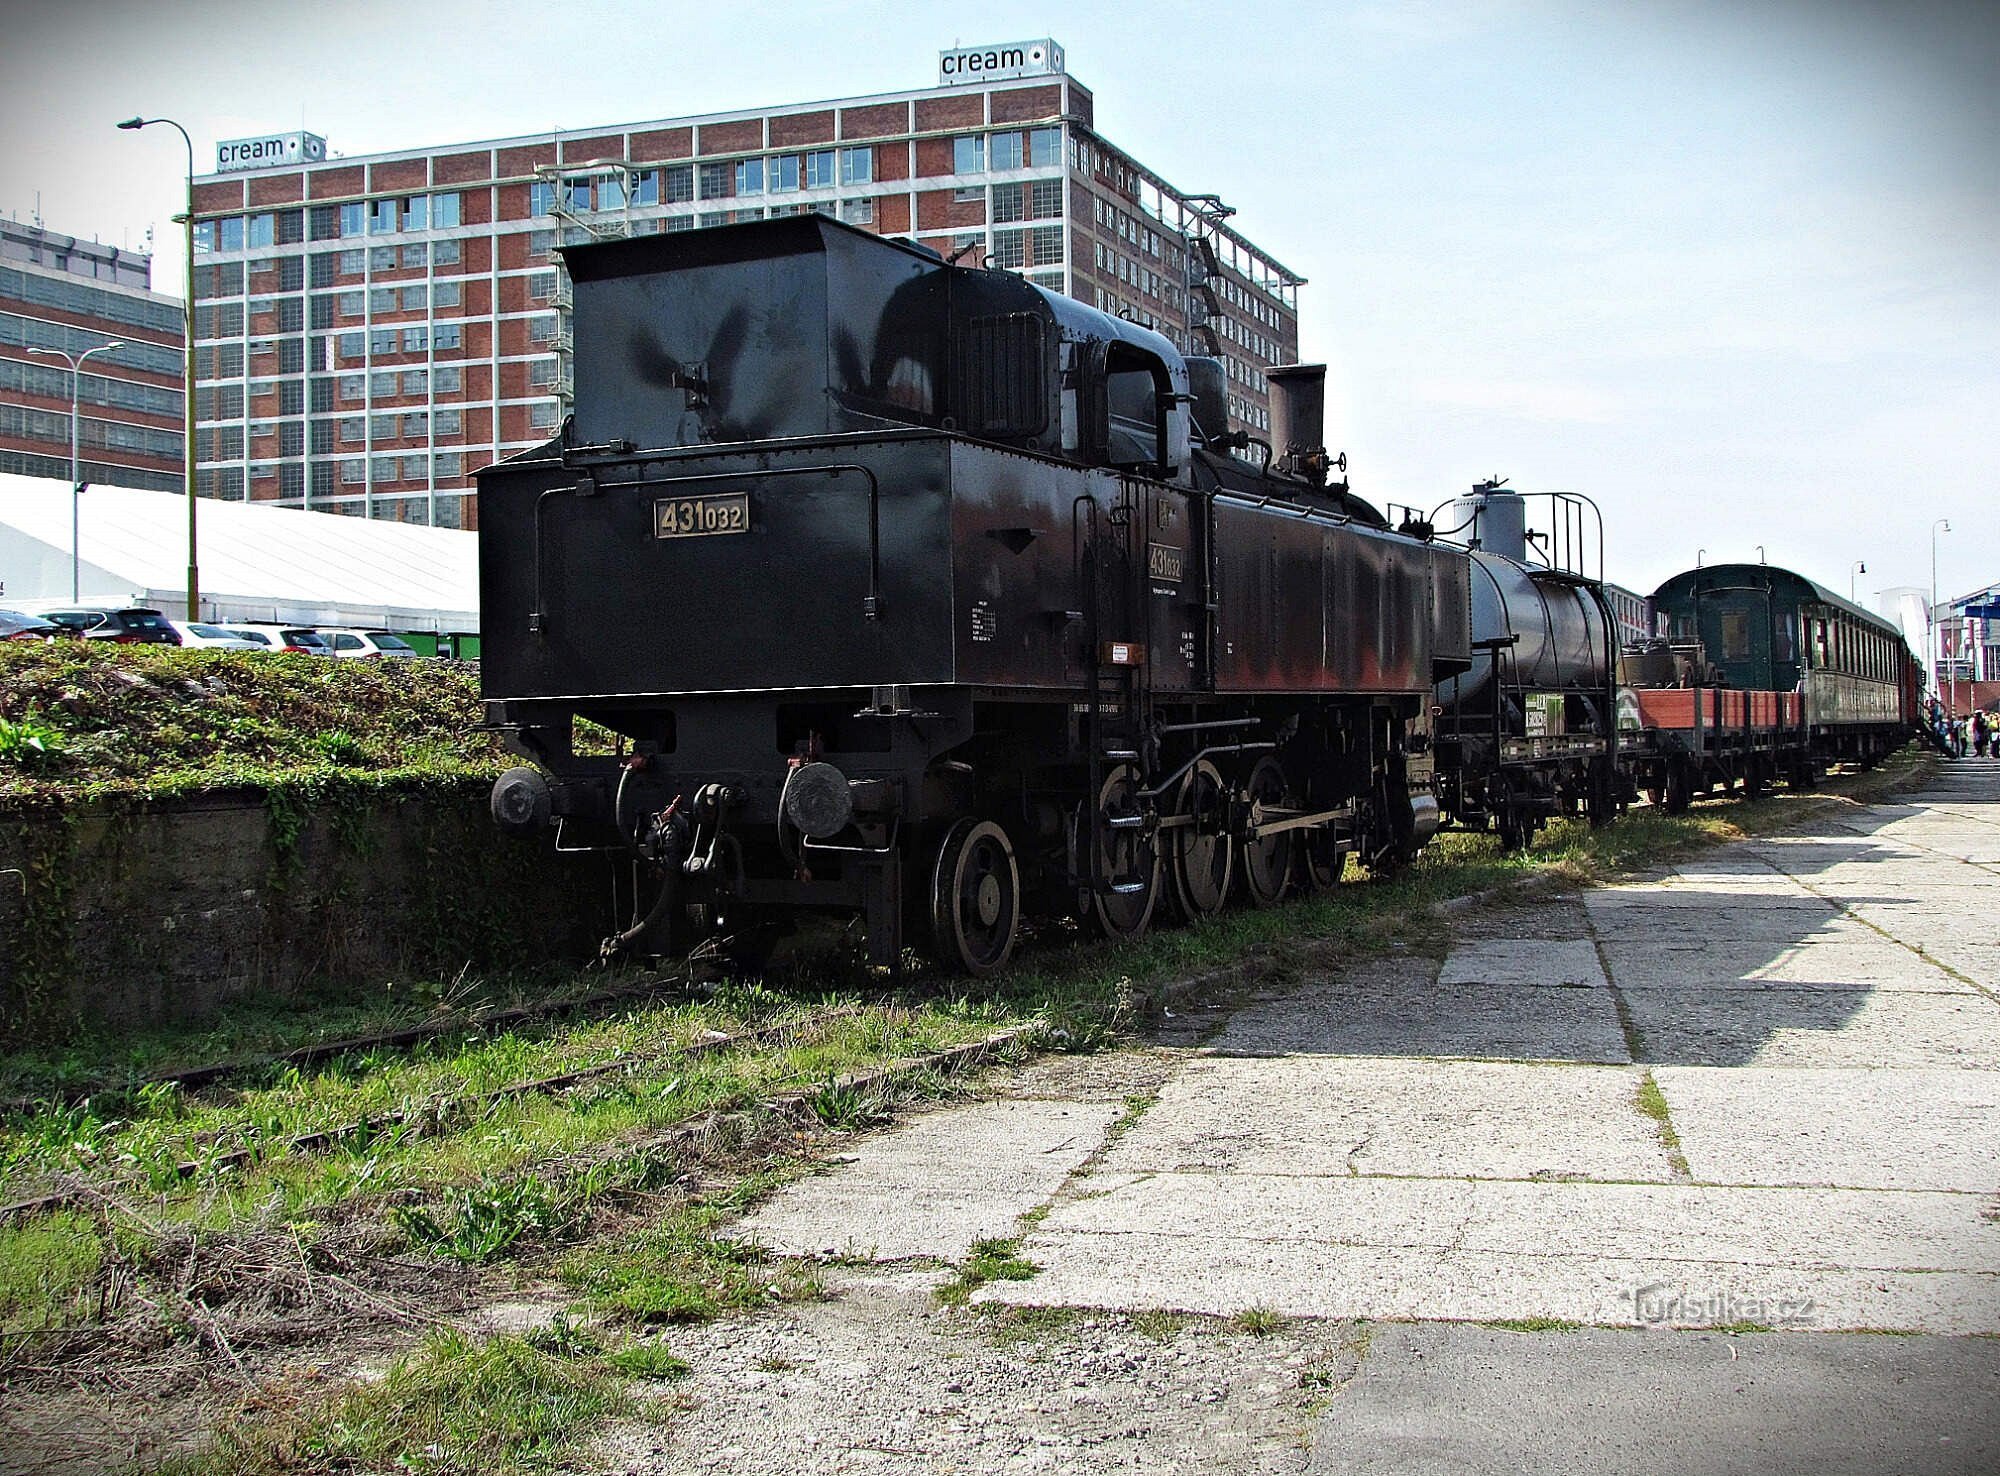 The Legion train arrived in Zlín